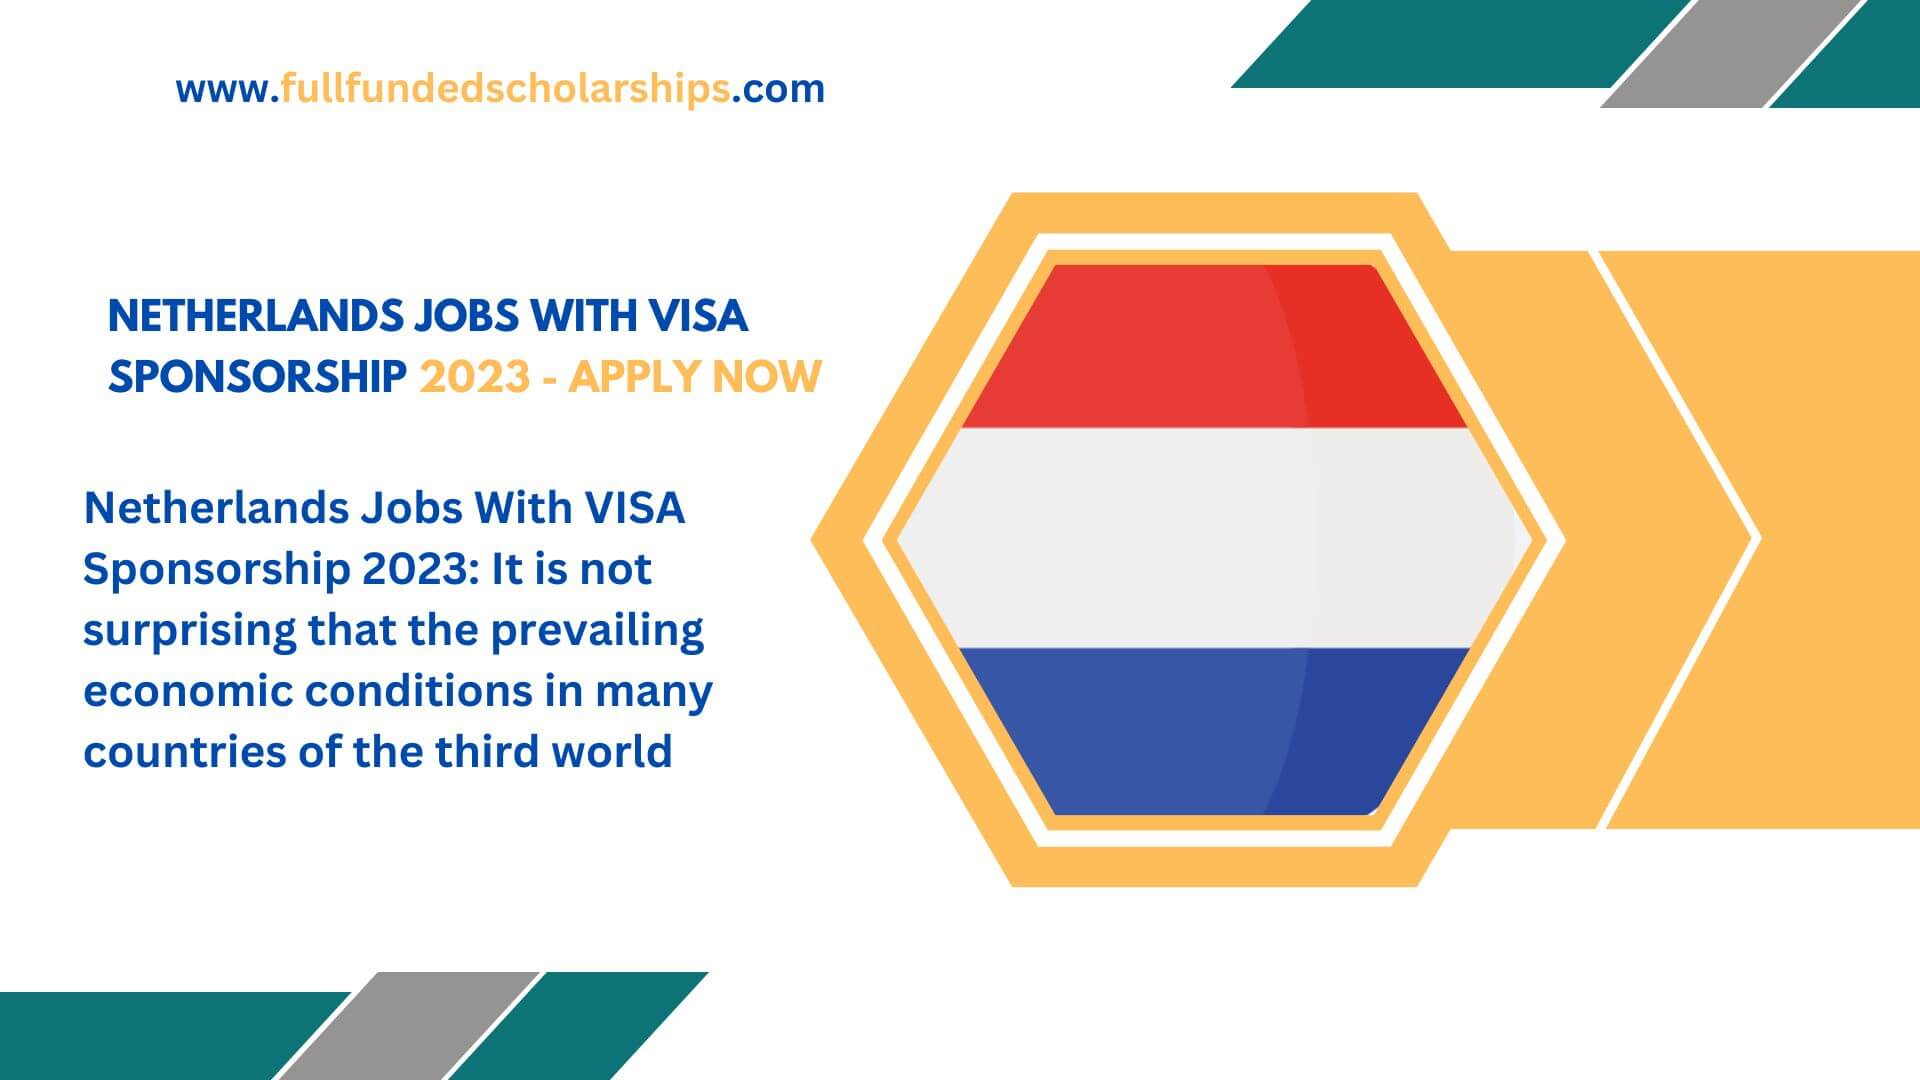 Netherlands Jobs With VISA Sponsorship